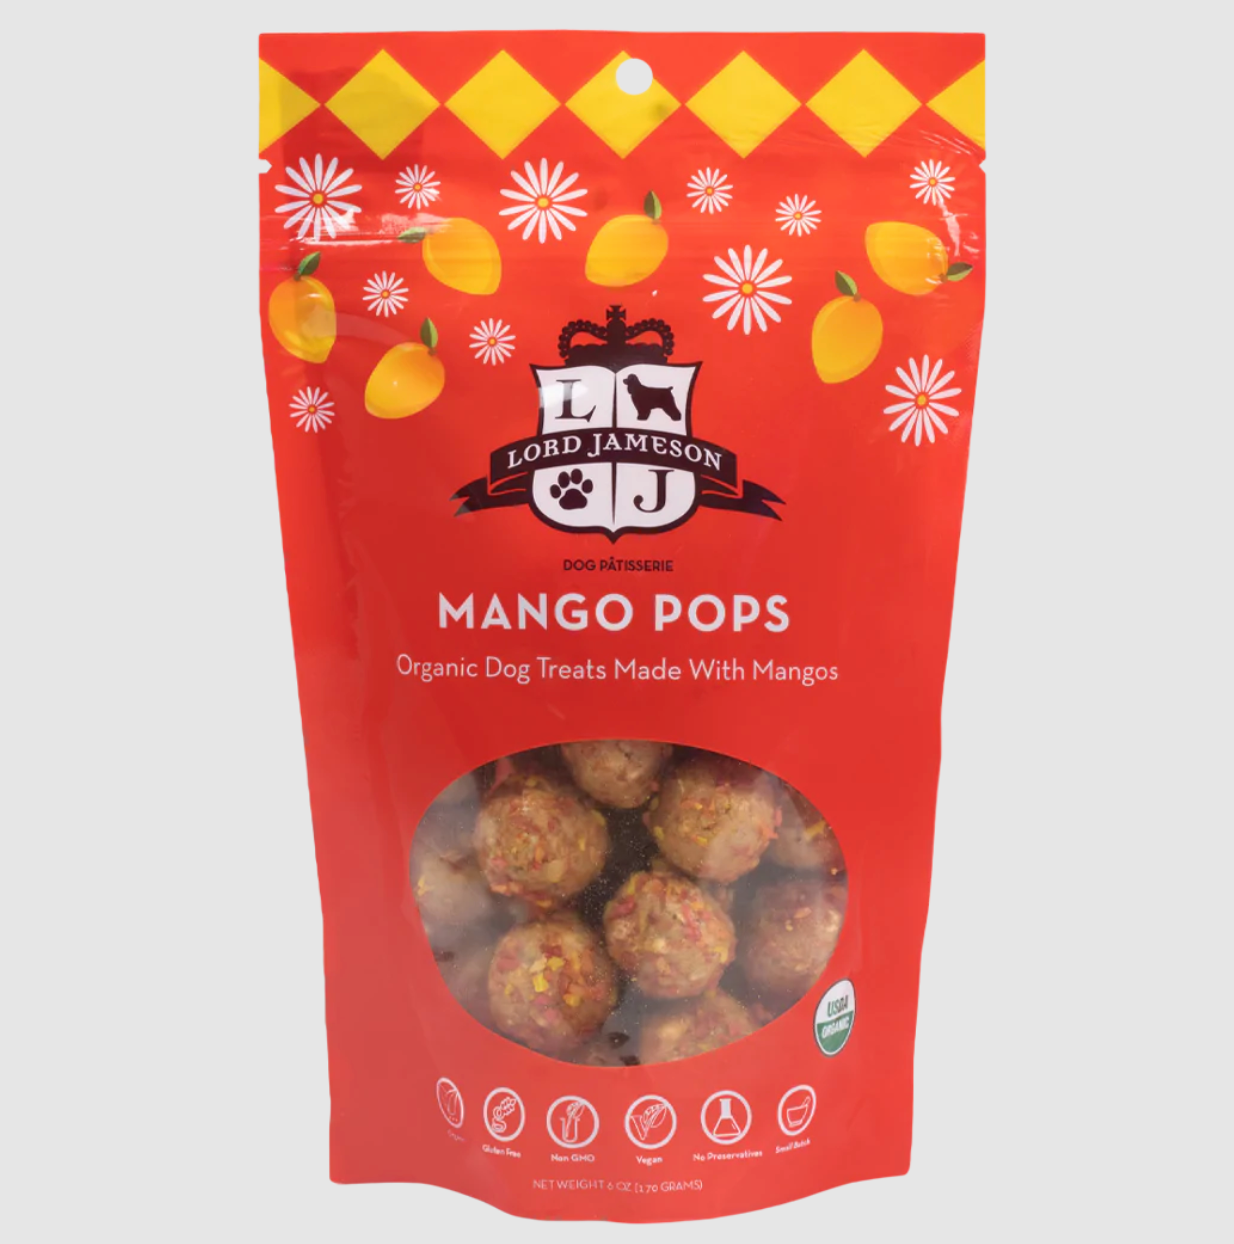 Lord Jameson "Mango Pops" Soft & Chewy Organic Dog Treats